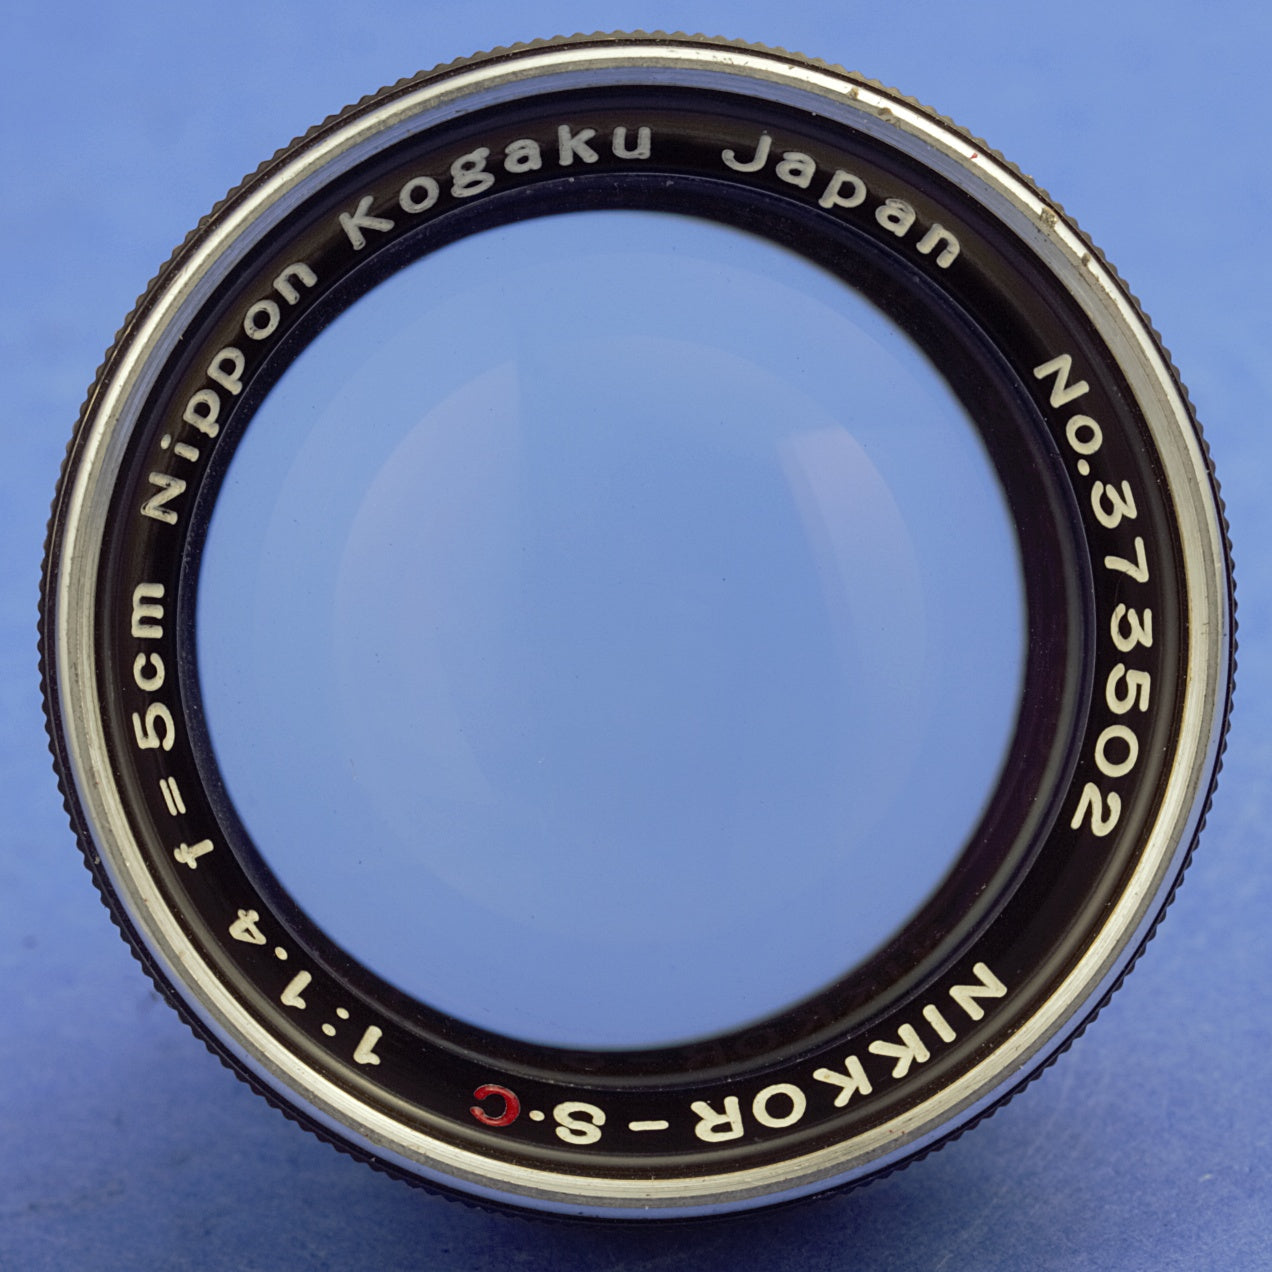 Nikon Nikkor-S.C 5cm 1.4 Black Rangefinder Lens S Mount Beautiful Condition